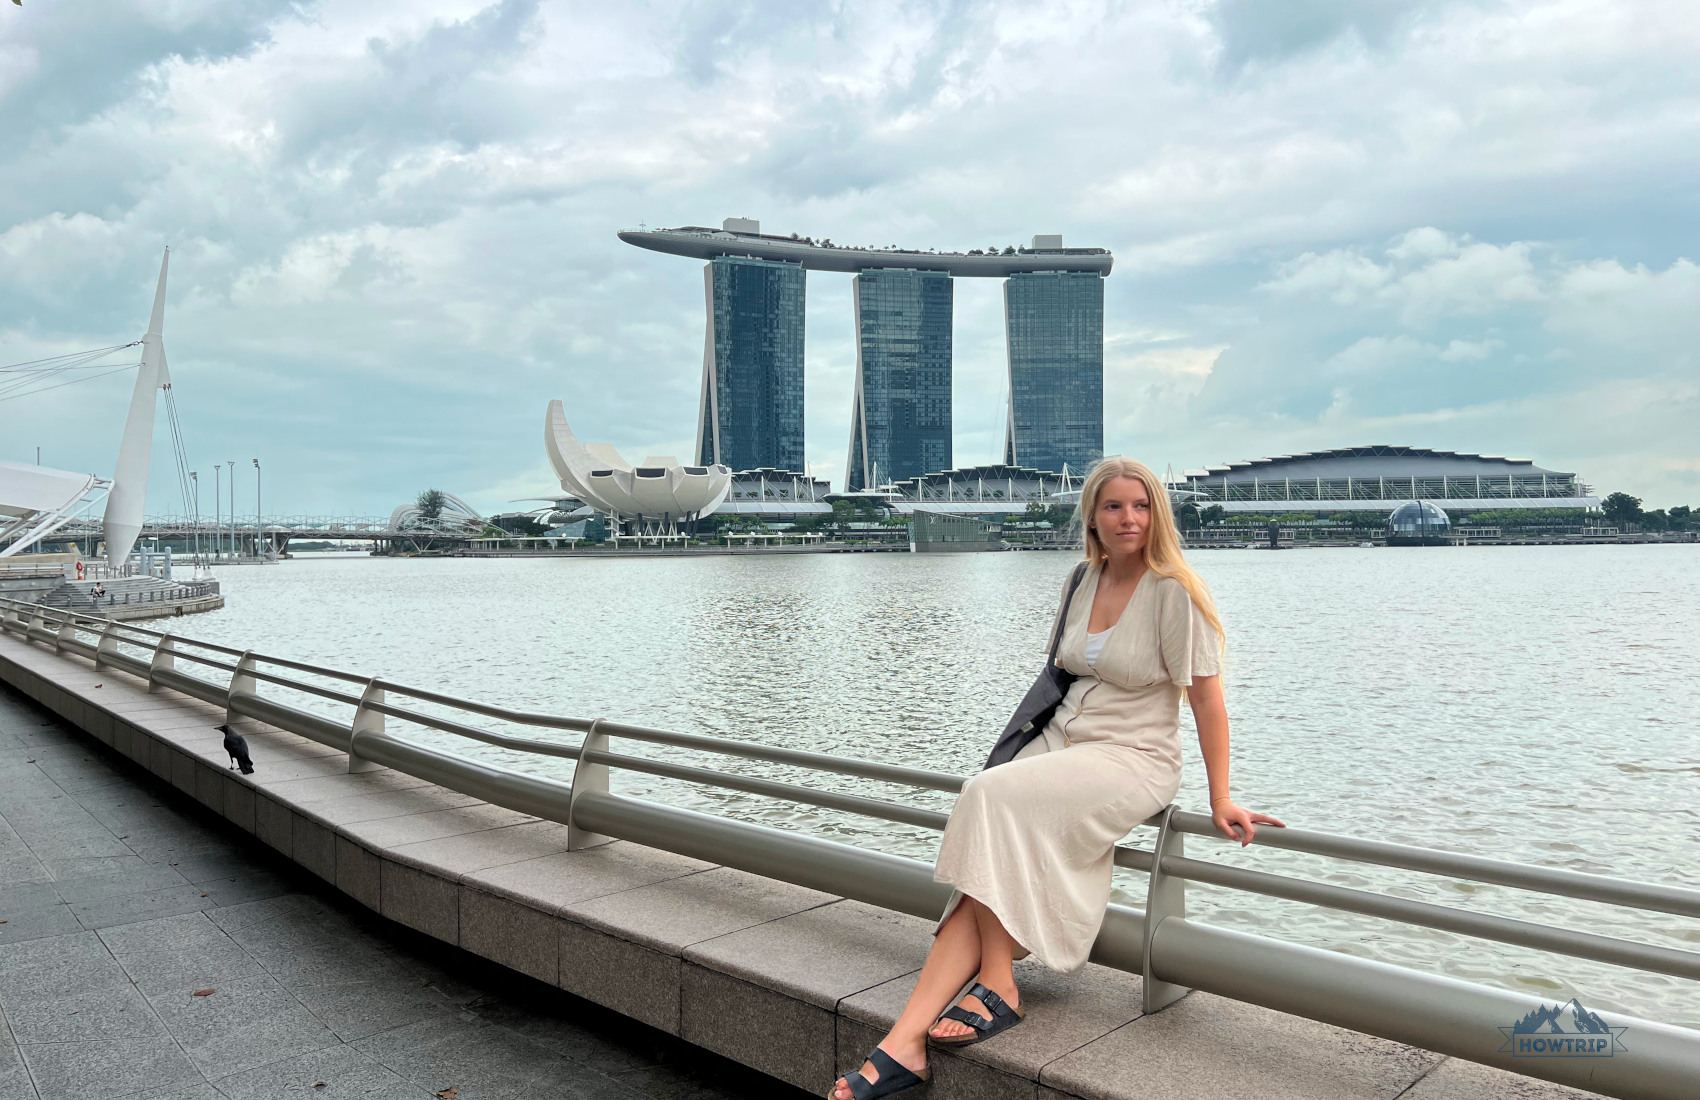 Сингапур Marina Bay Sands